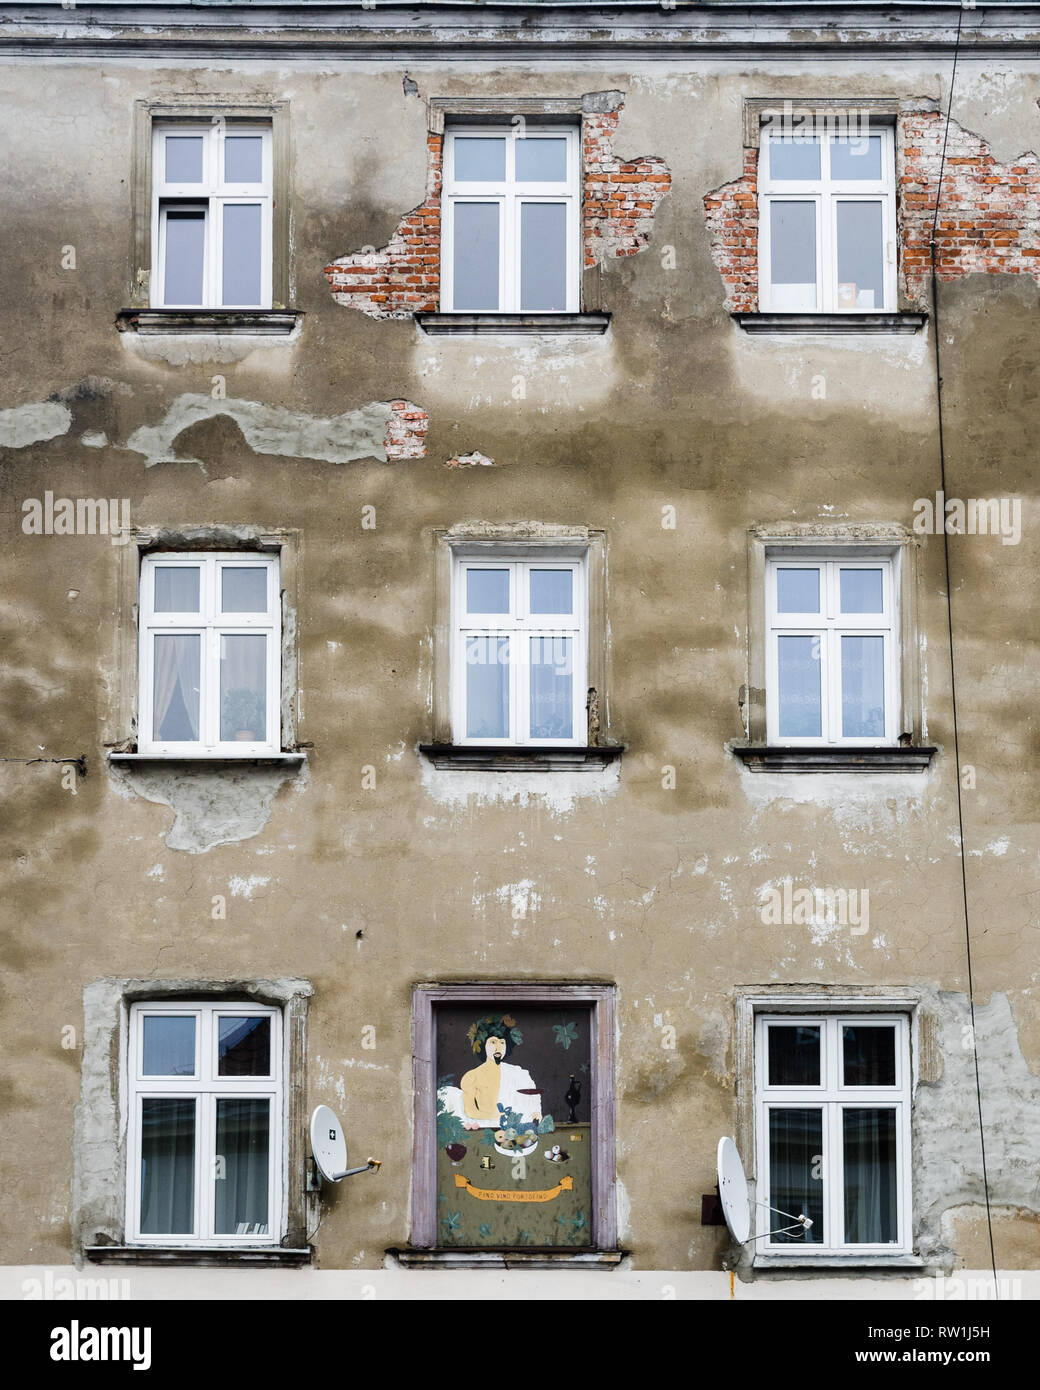 Mural between windows on a facade of a rundown building in Kazimierz District, Krakow, Poland Stock Photo